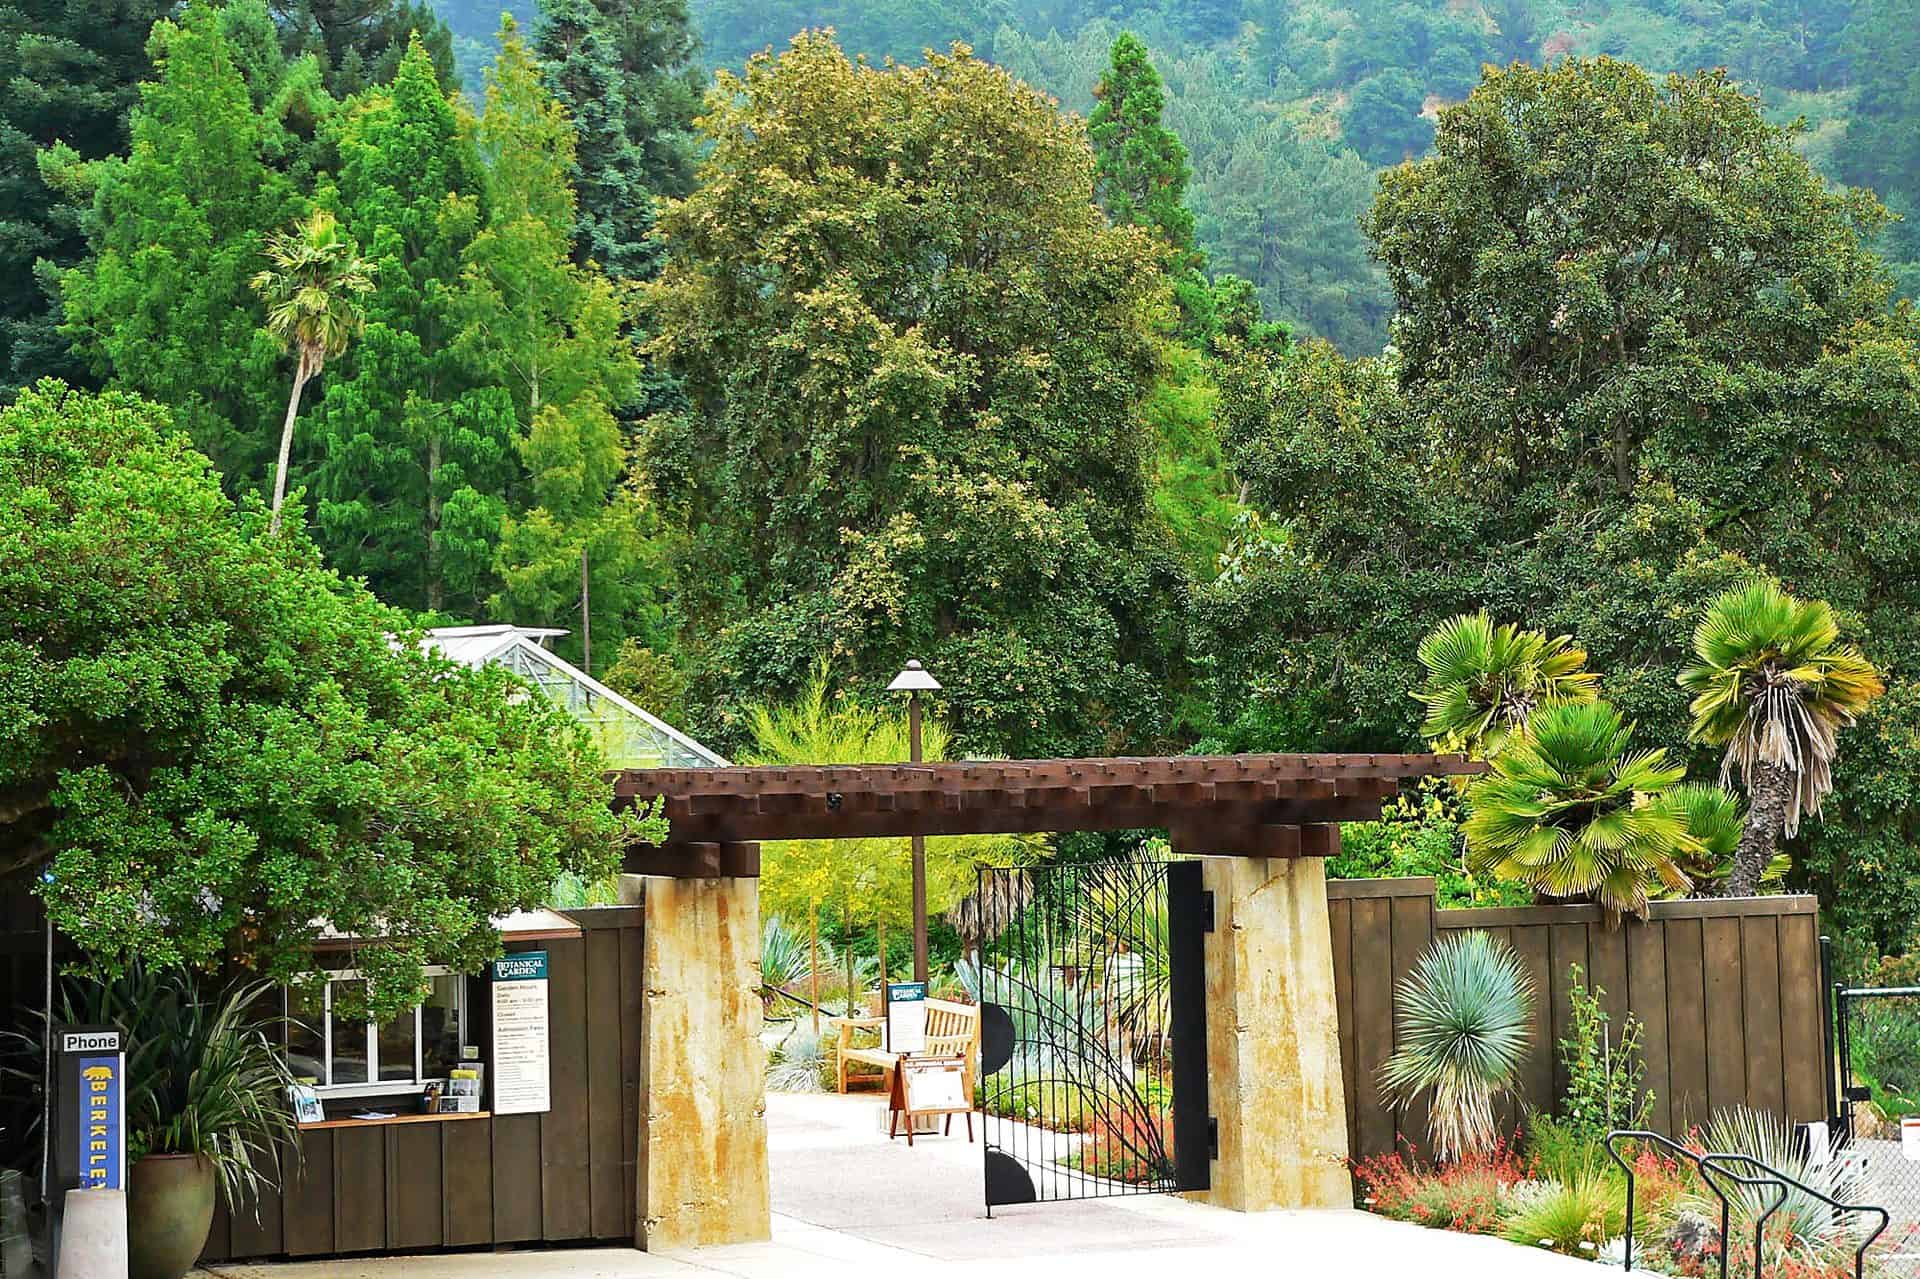 university of california botanic garden entrance gate